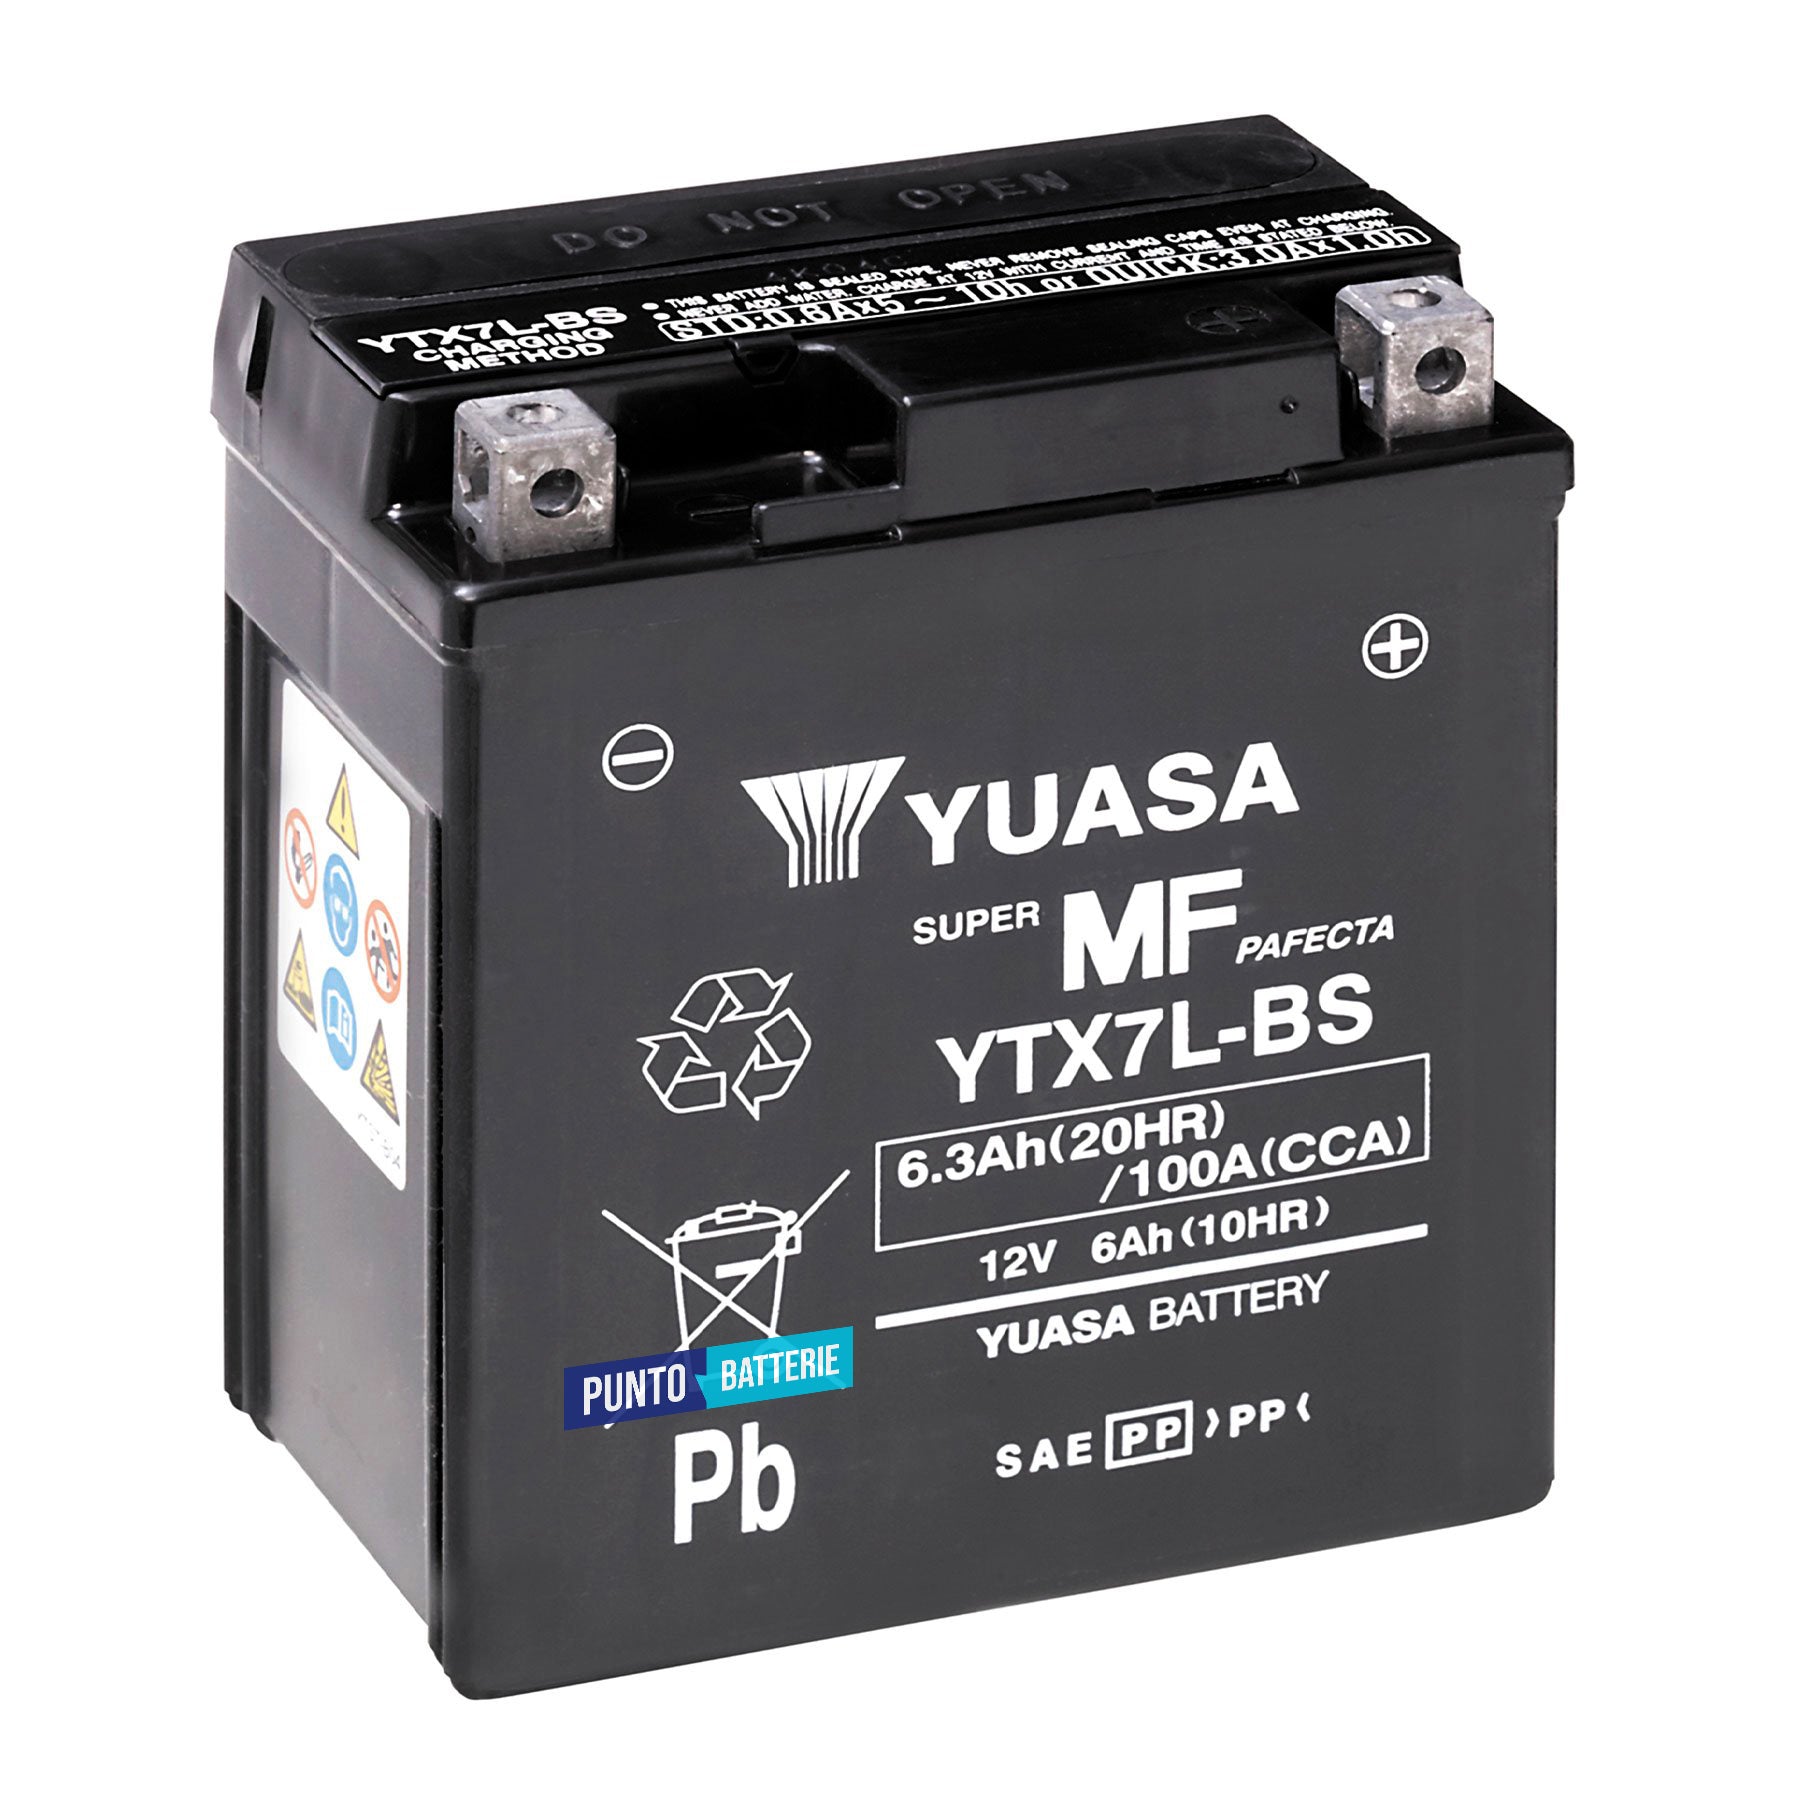 Batteria originale Yuasa YTX YTX7L-BS, dimensioni 115 x 72 x 132, polo positivo a destra, 12 volt, 6 amperora, 100 ampere. Batteria per moto, scooter e powersport.